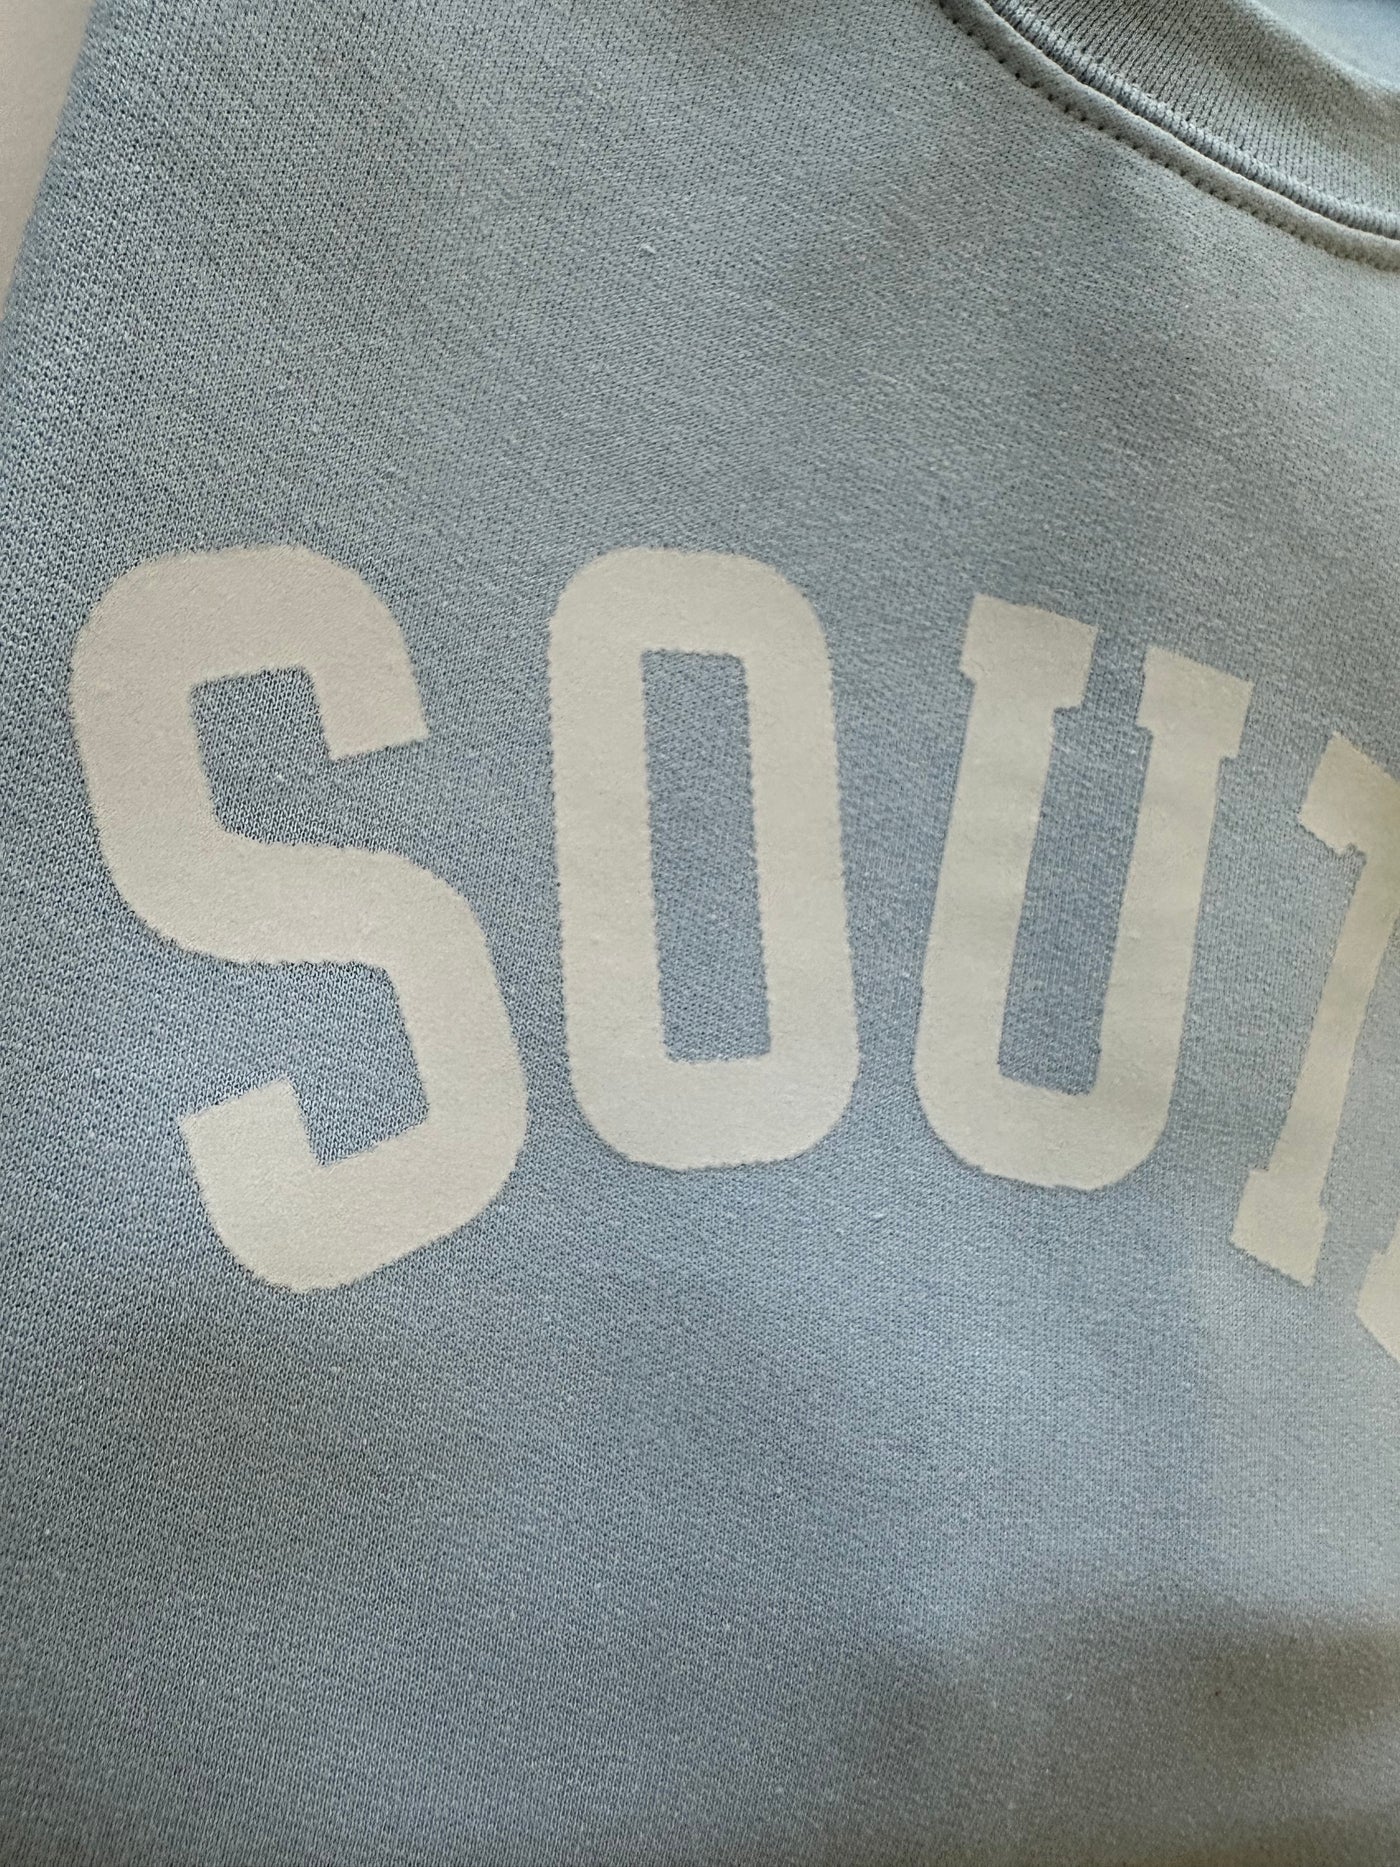 "SOUTH" Sweatshirt - Blue